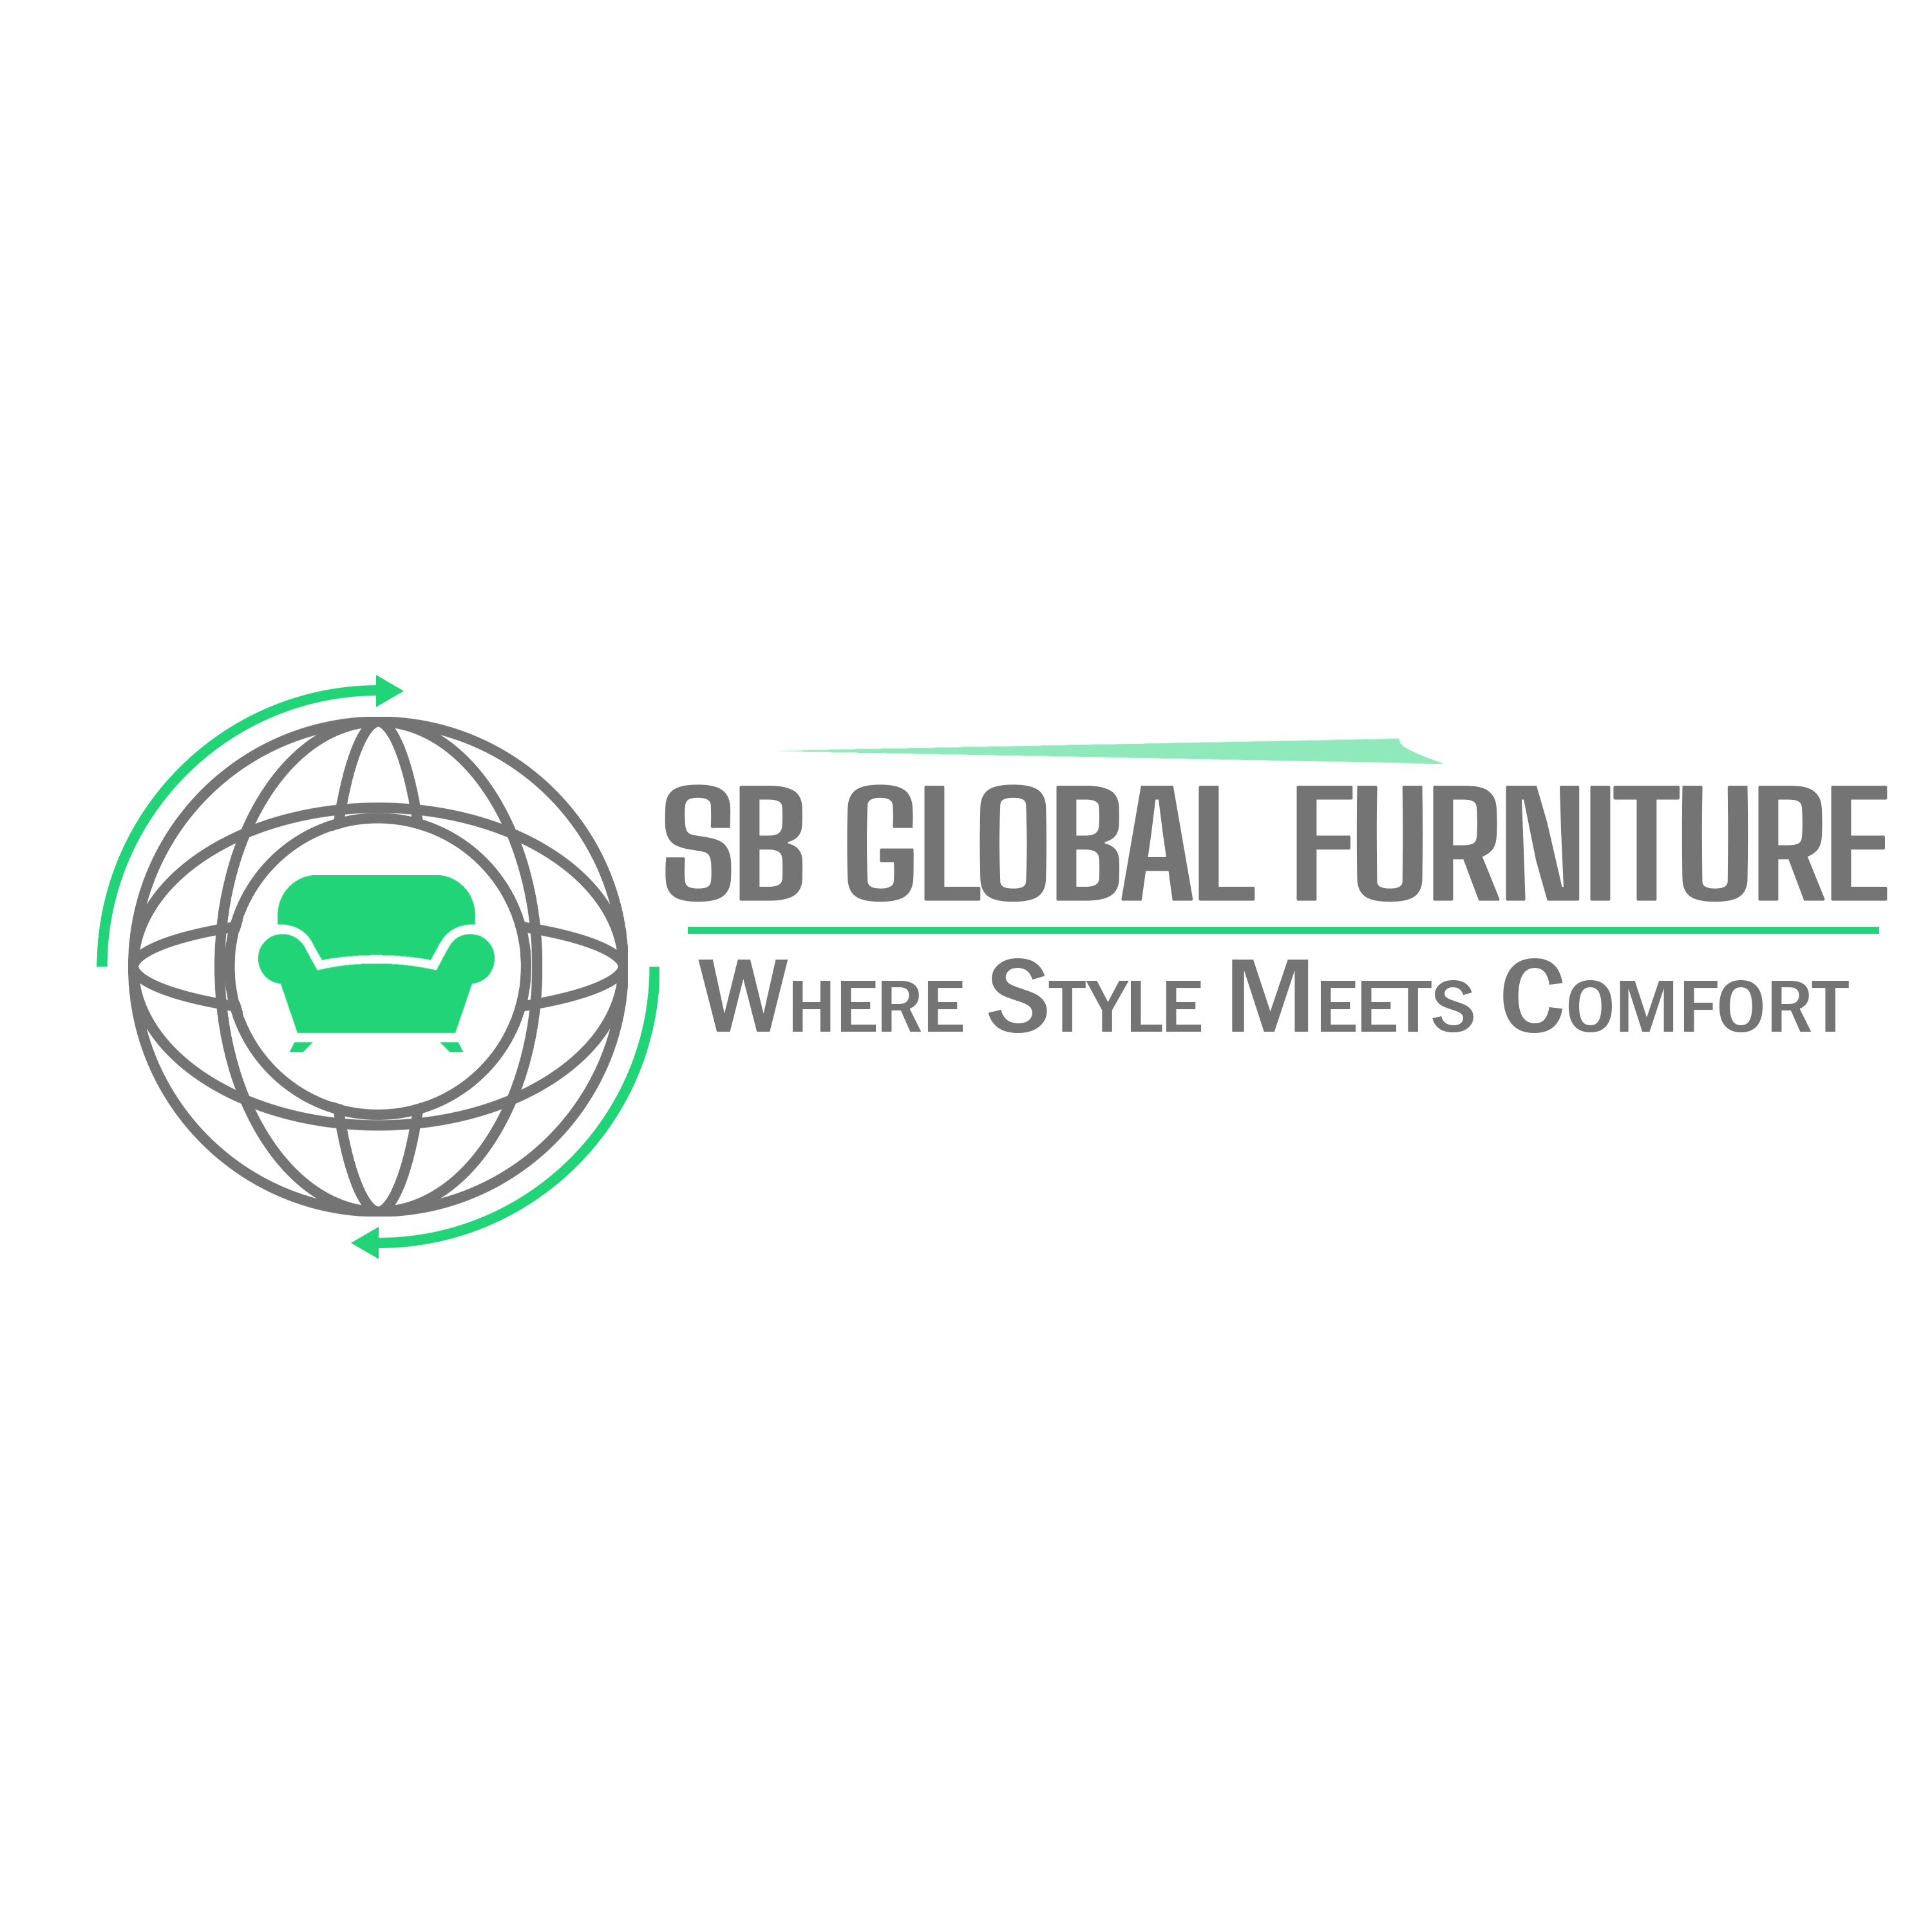 SB Global Furniture Logo